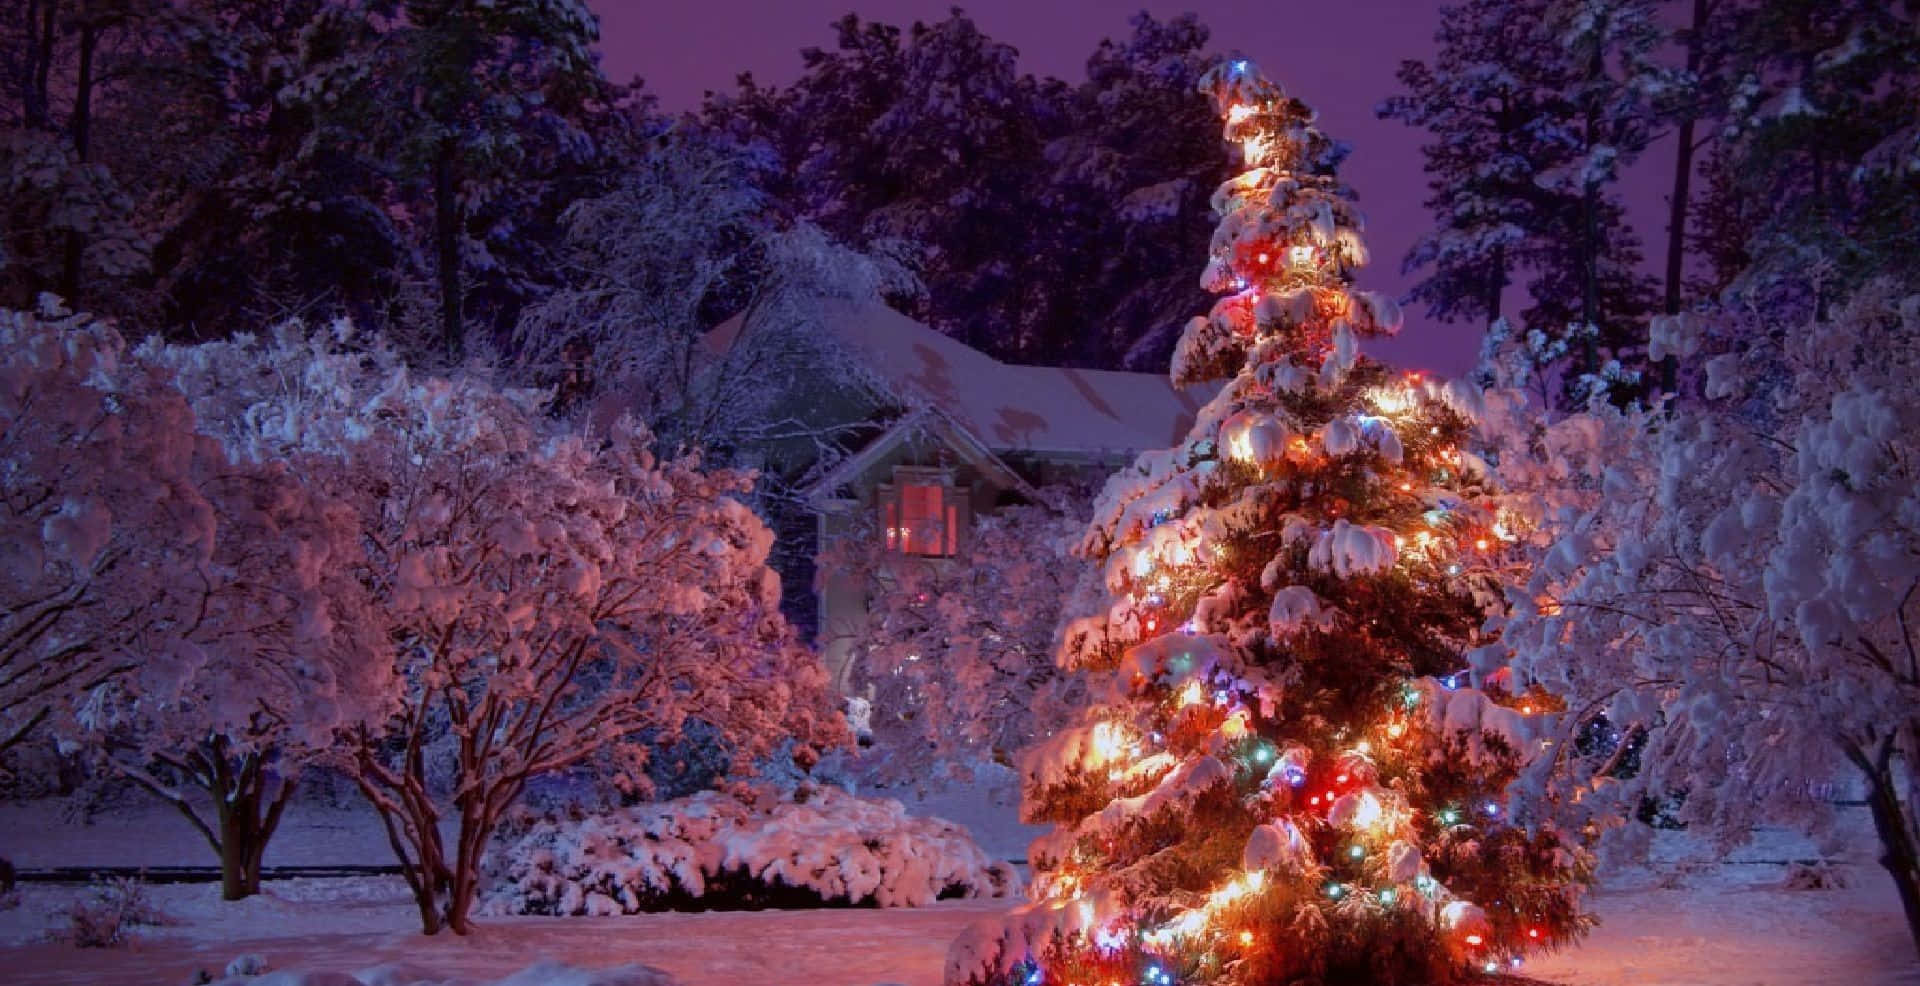 Magical Winter Wonderland at Christmas